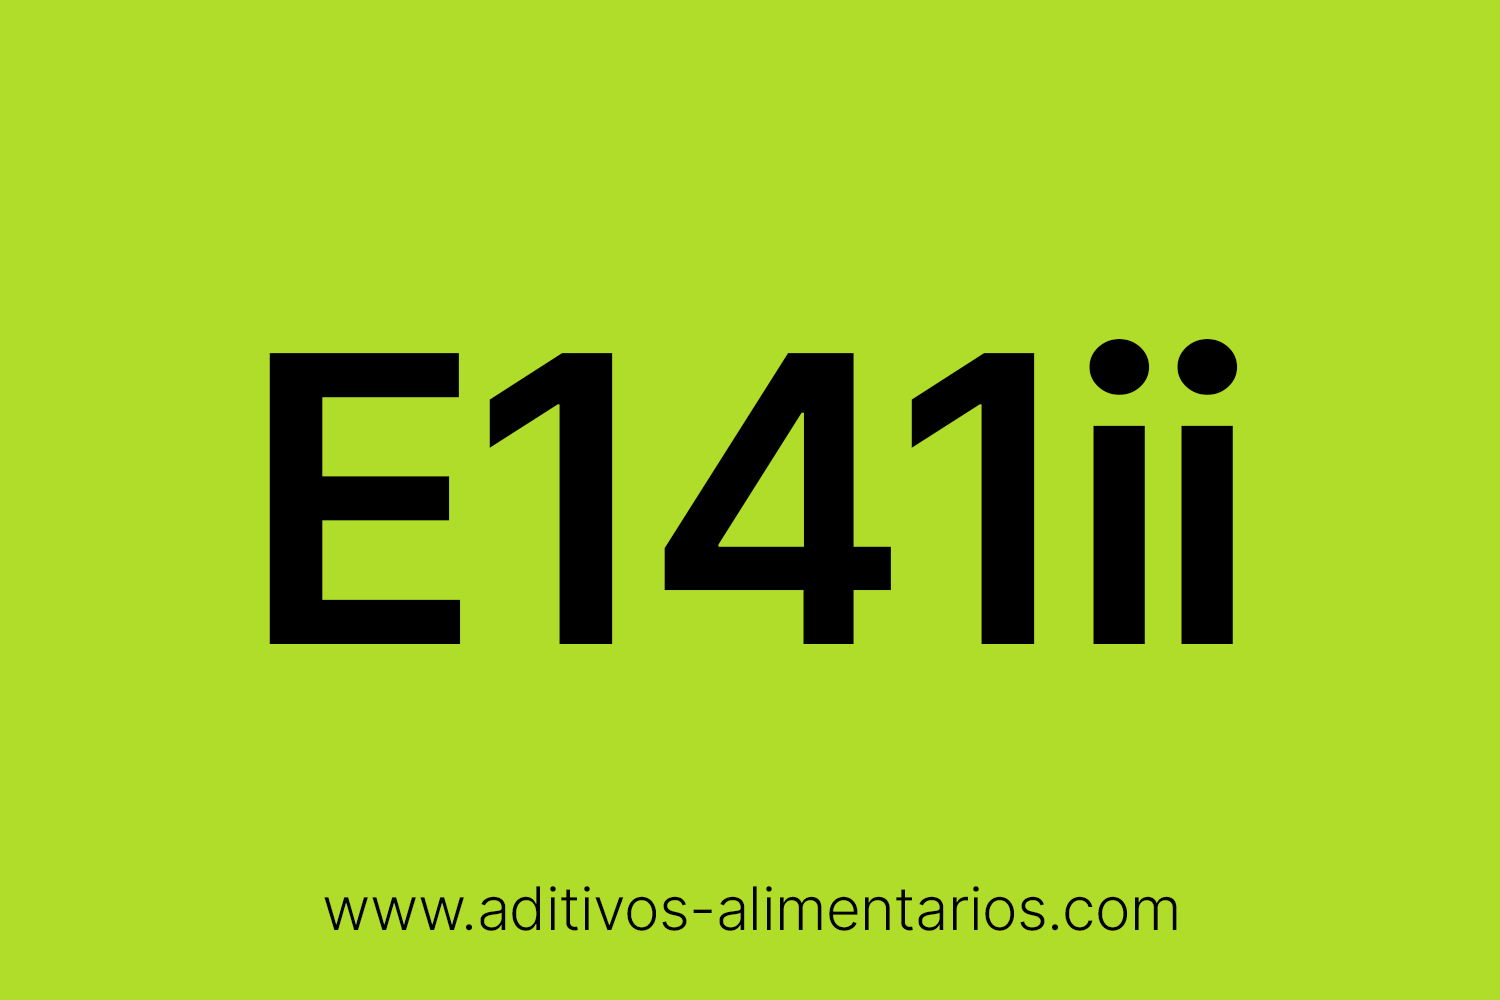 Aditivo Alimentario - E141ii - Complejo Cúprico de Clorofilina